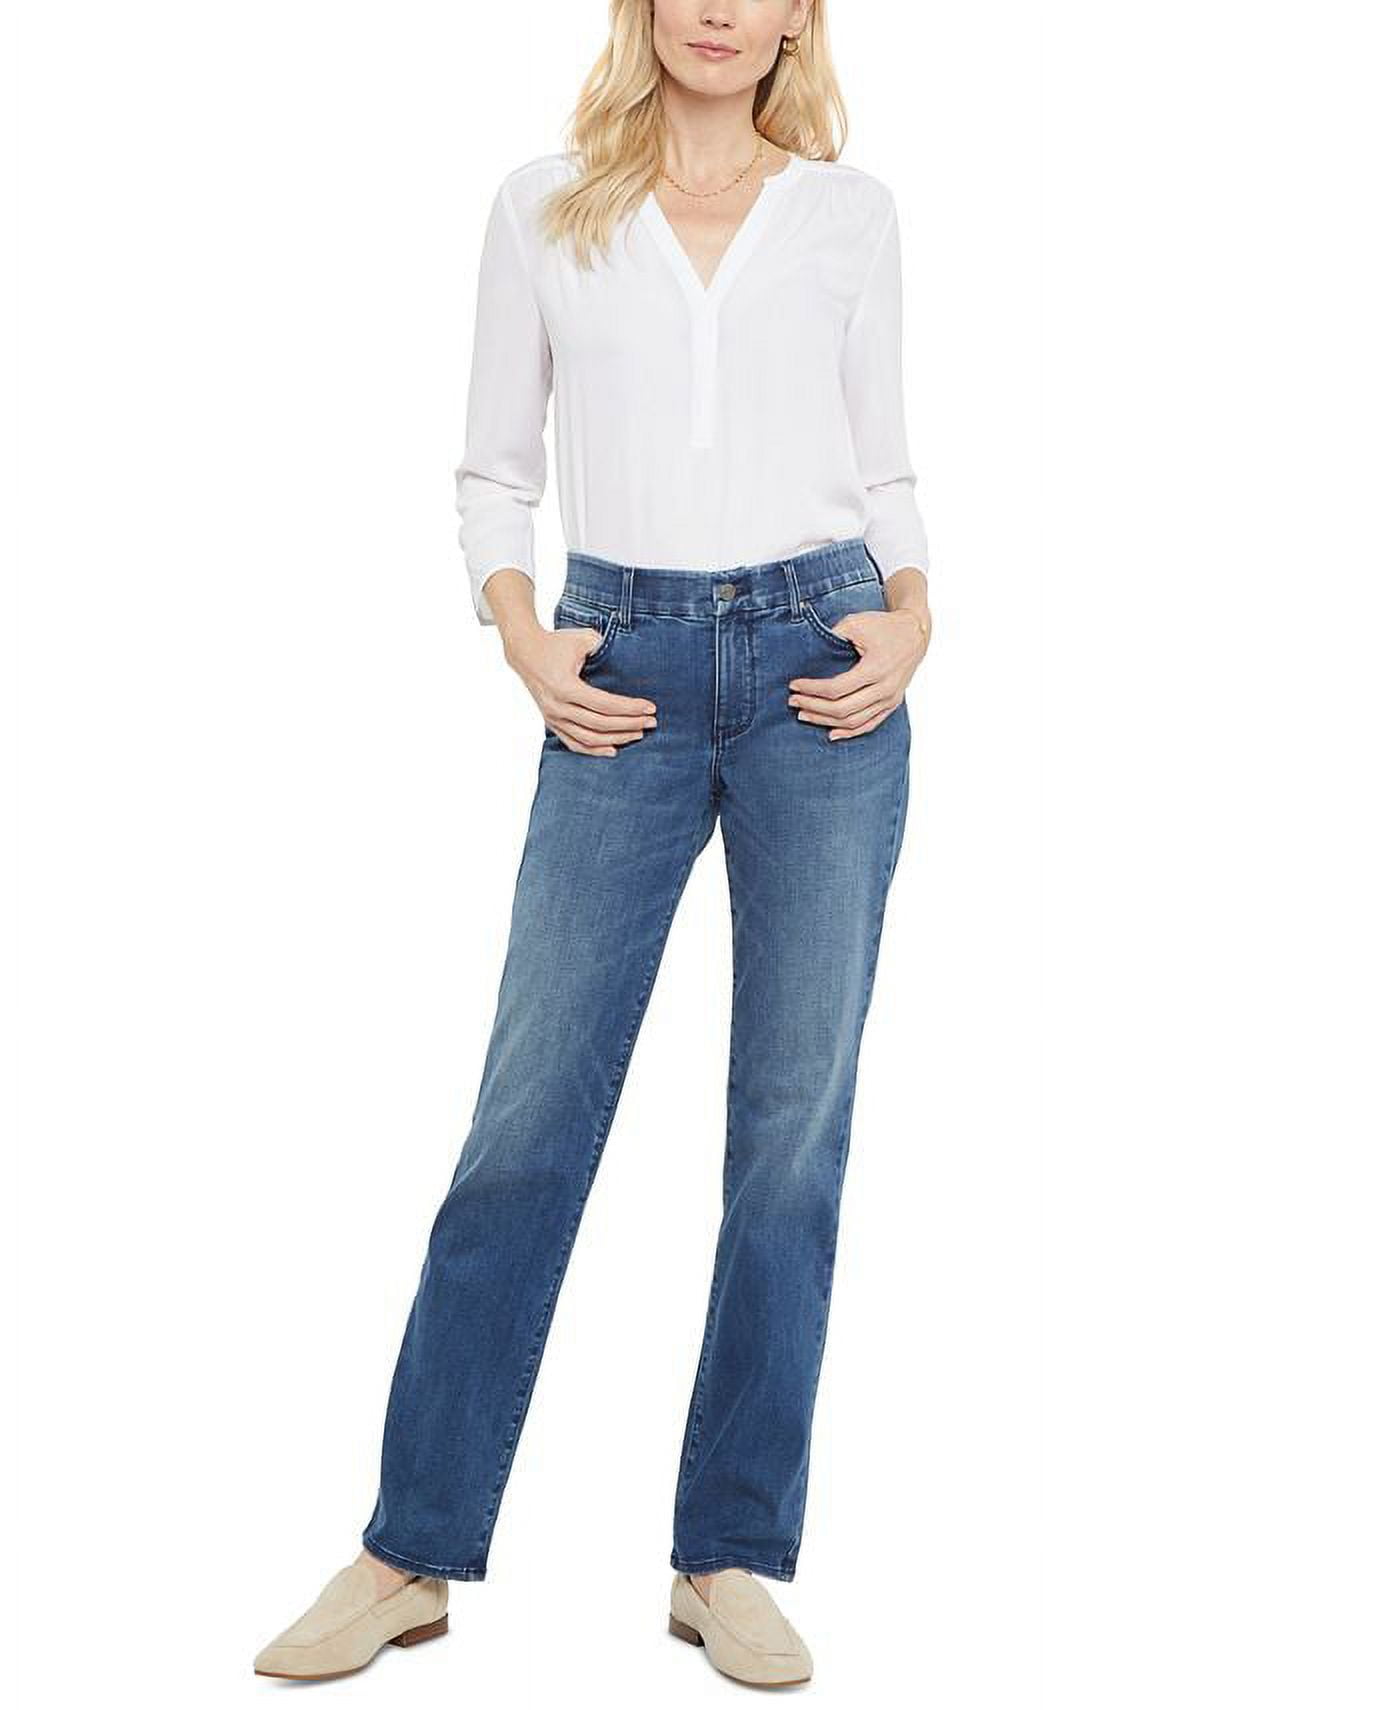 Sweet Look Classic Rhinestone Premium Women's Stretch Skinny Fit BLUE Denim  Jeans Pants